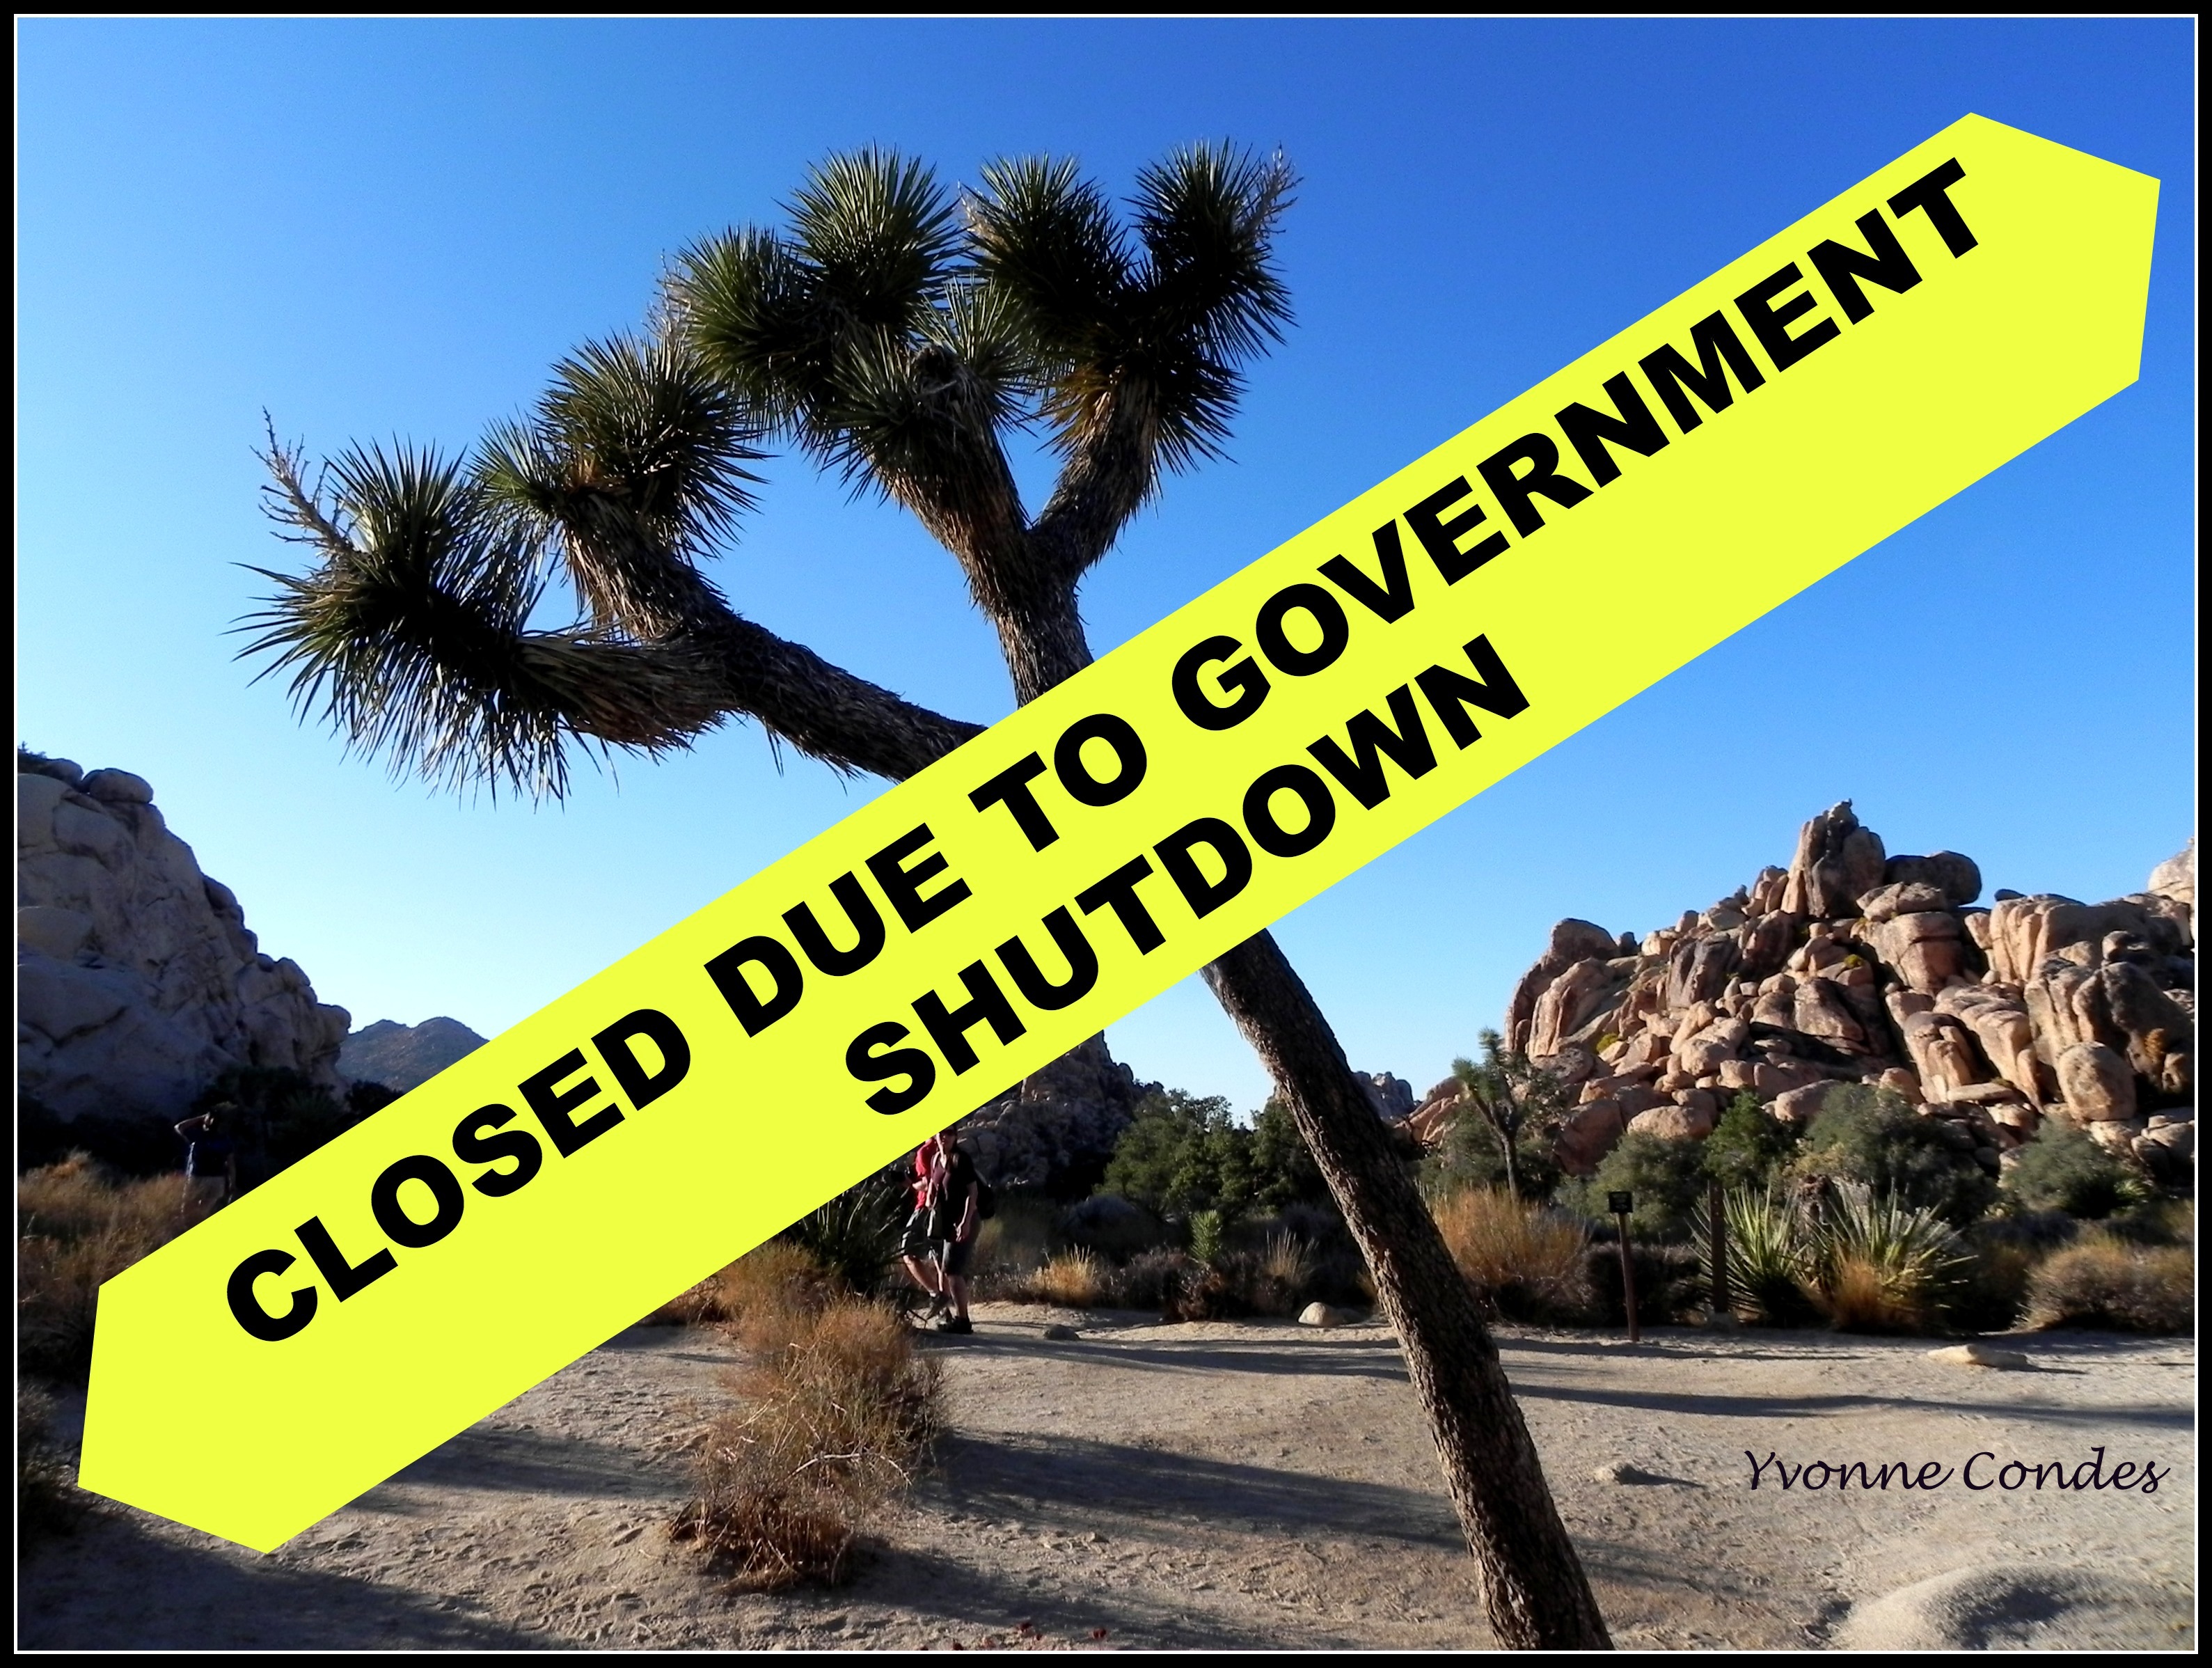 Joshua Tree Closed Due to Government Shutdown